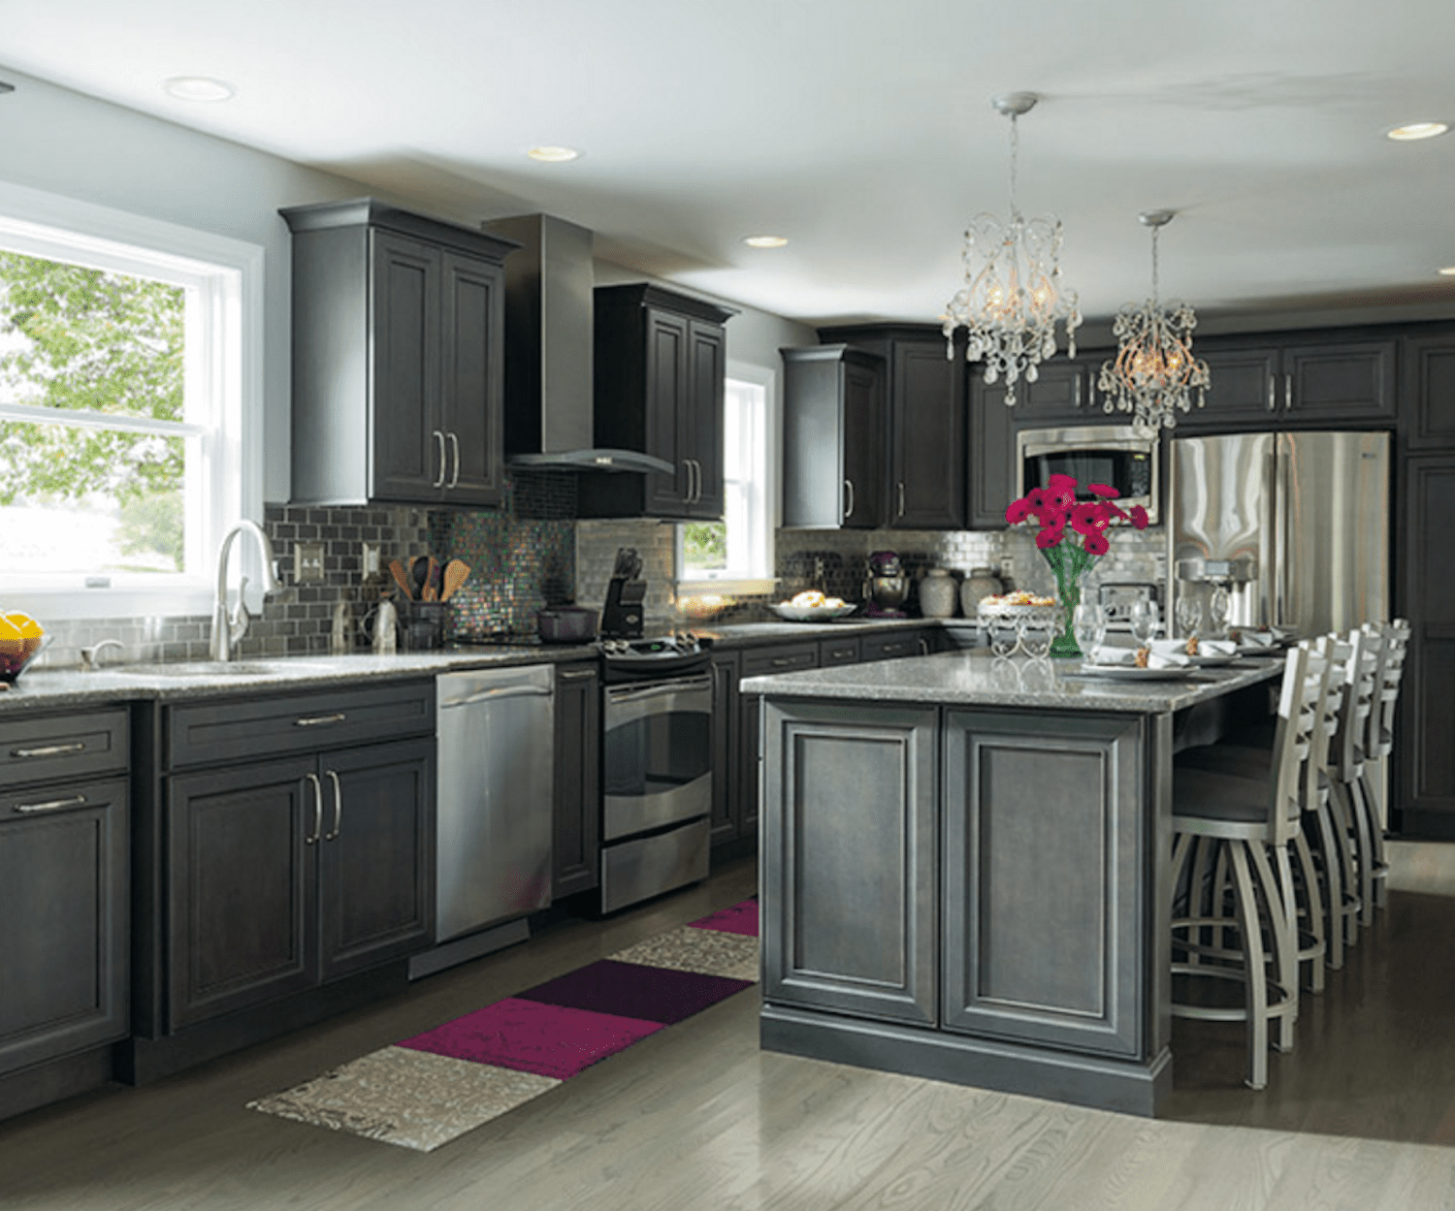 3 Inspiring Gray Kitchen Design Ideas - grey kitchen cabinets what colour walls